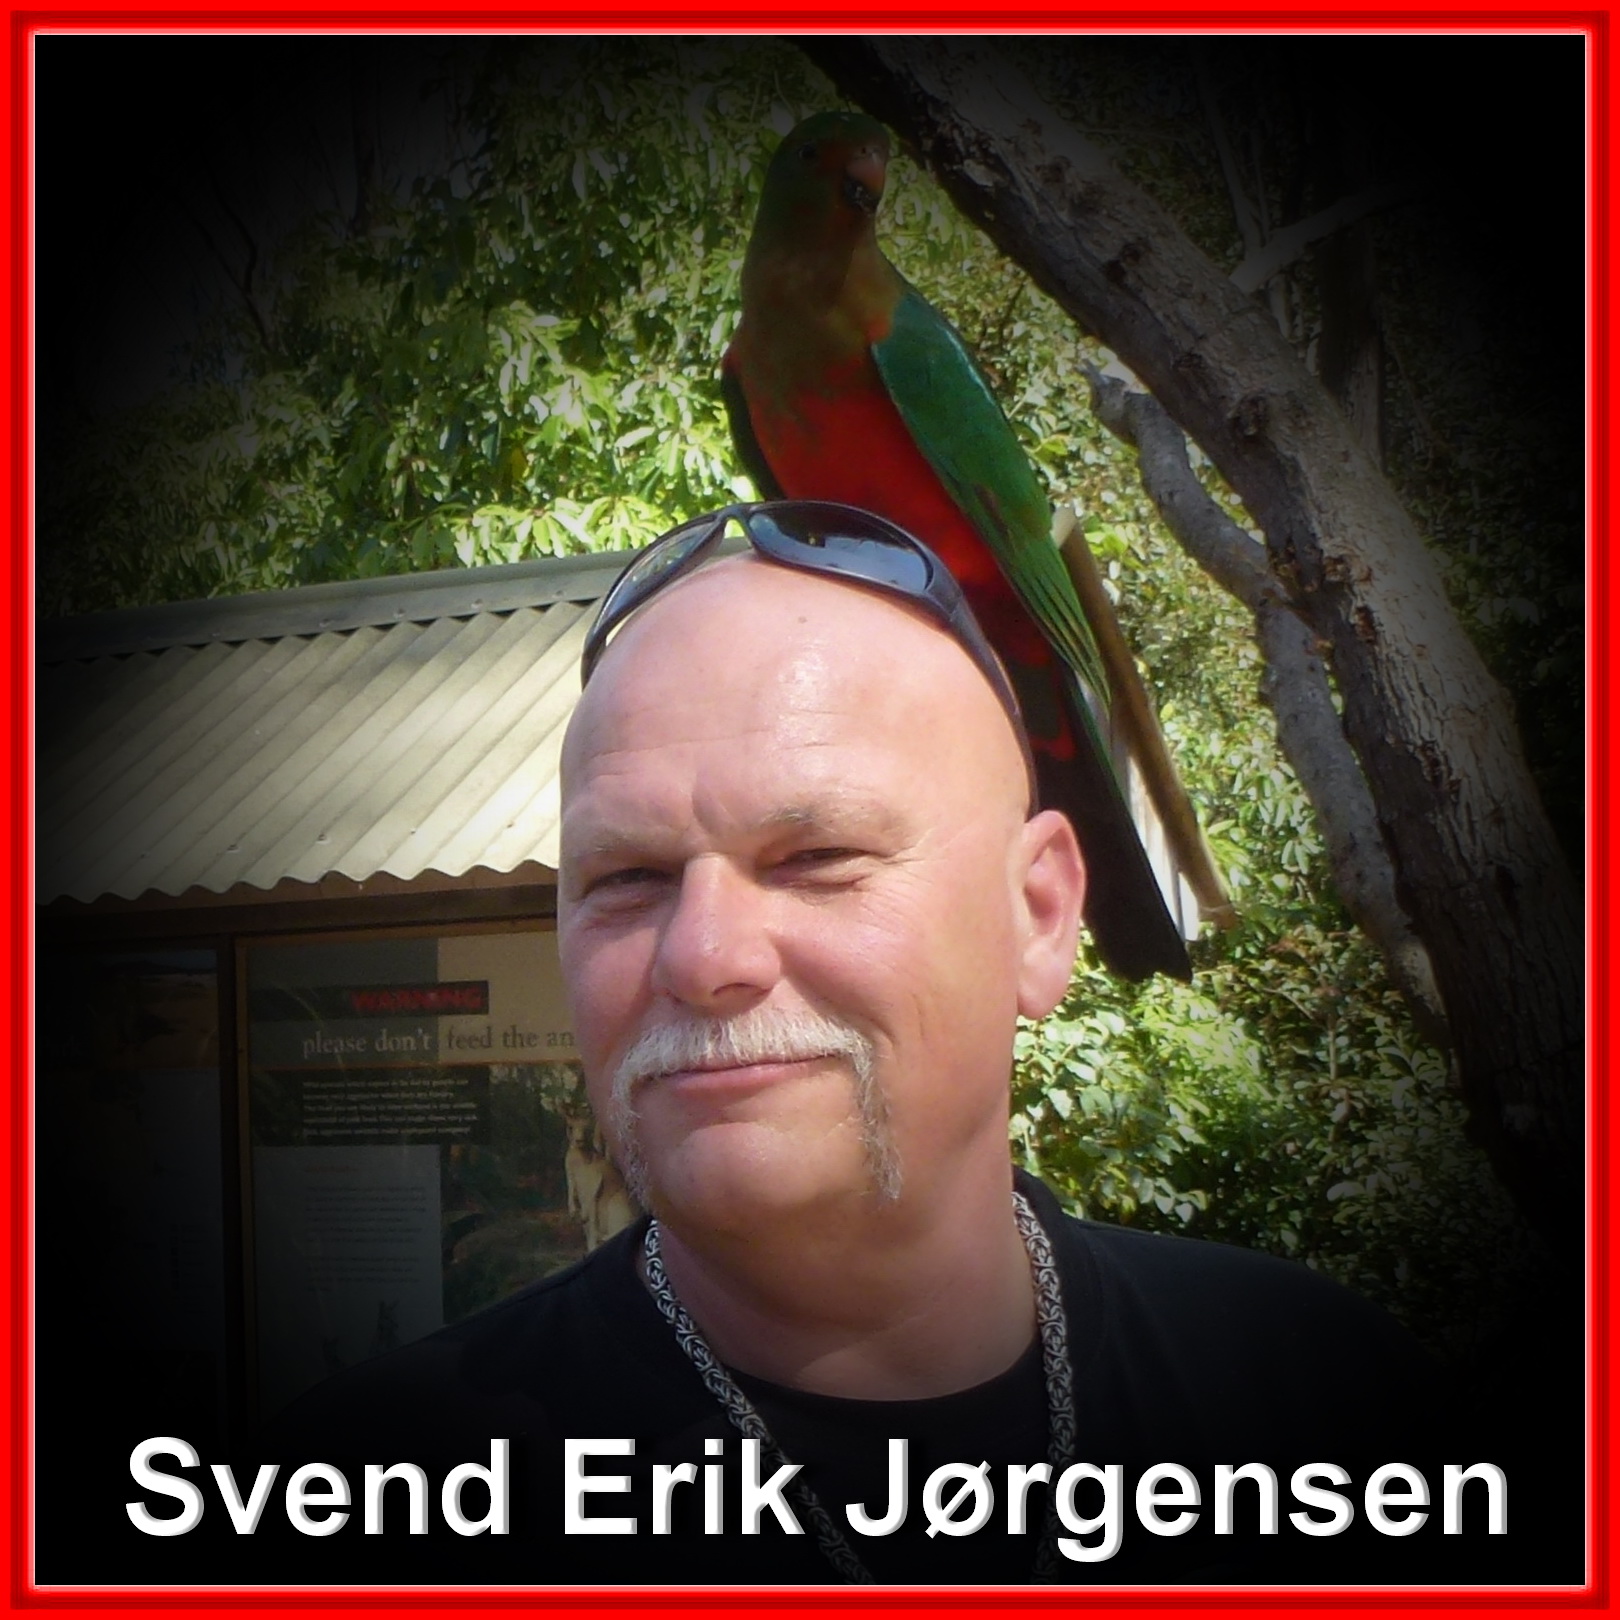 Svend Erik Jrgensen